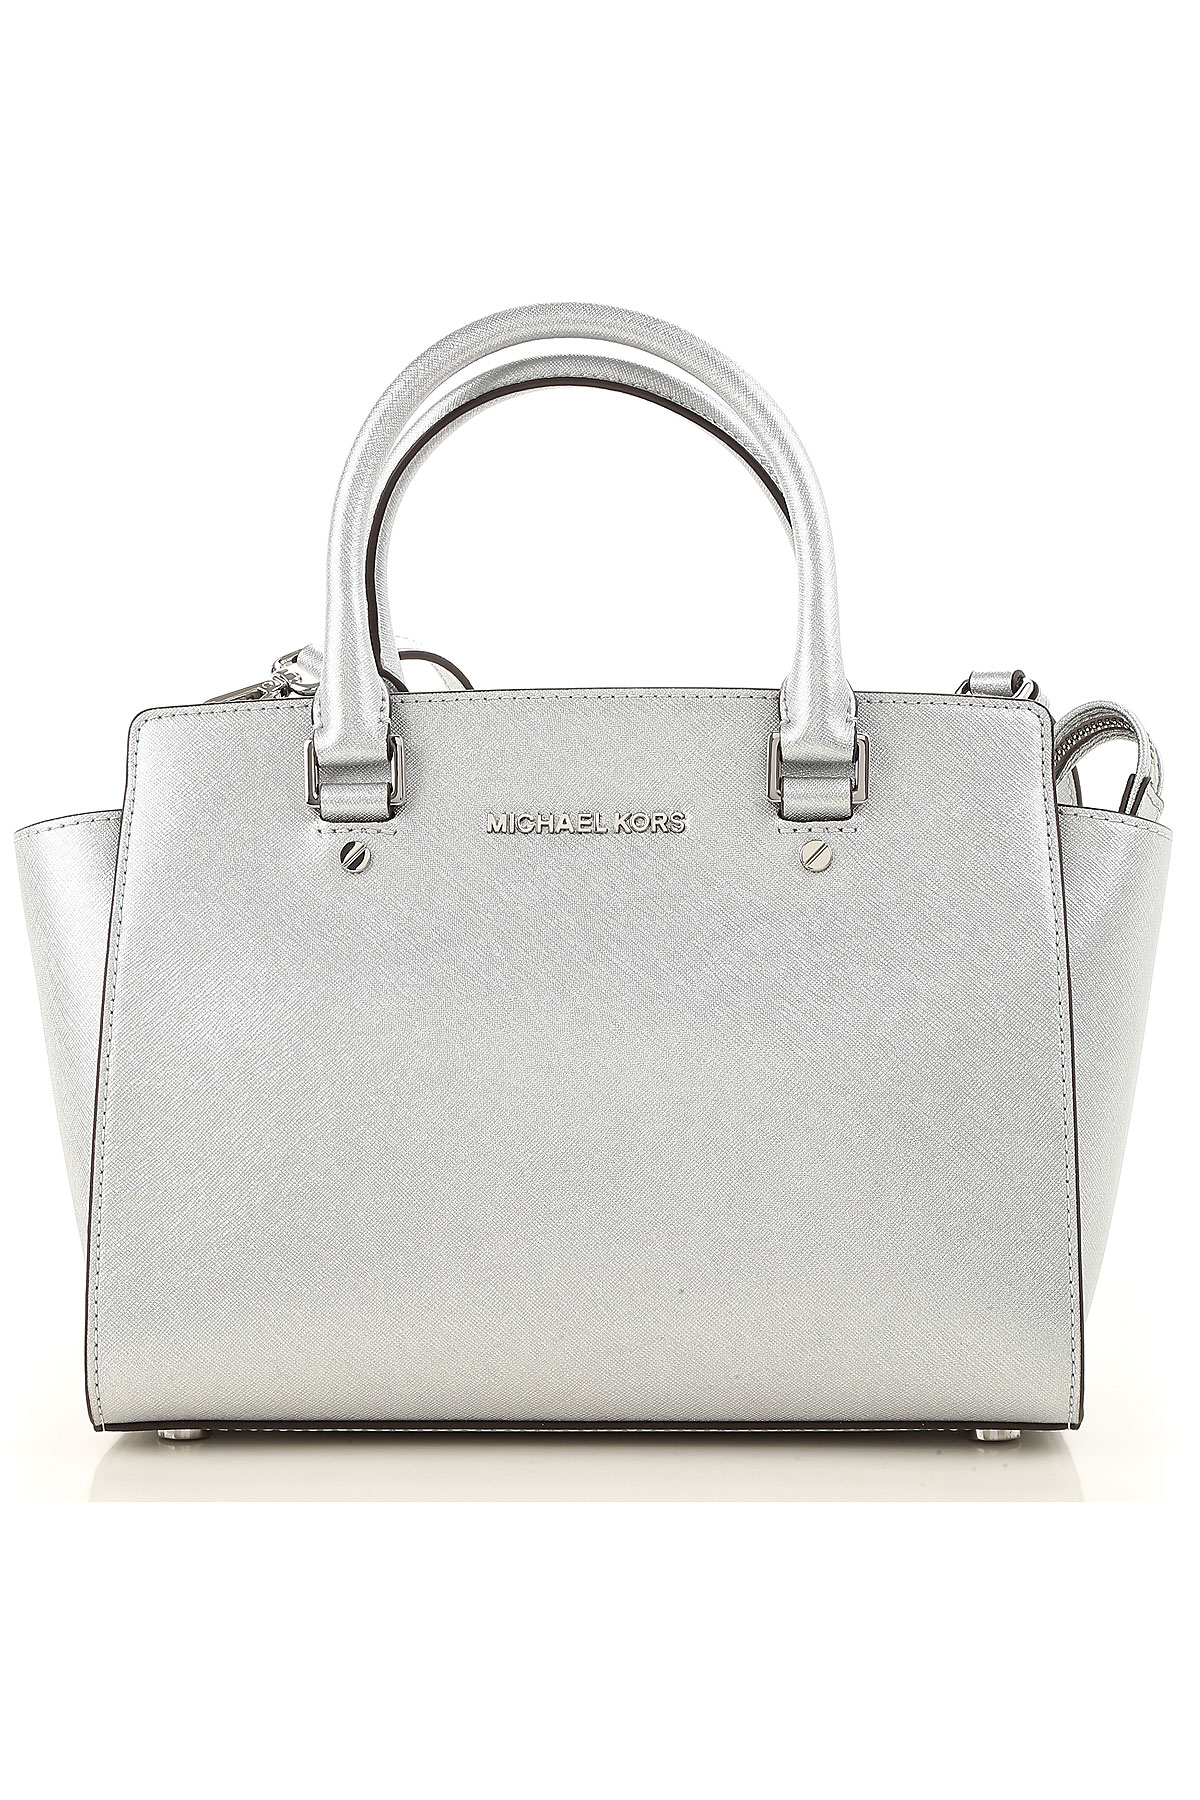 Handbags Michael Kors, Style code: 30s3glms2l-silver-n495